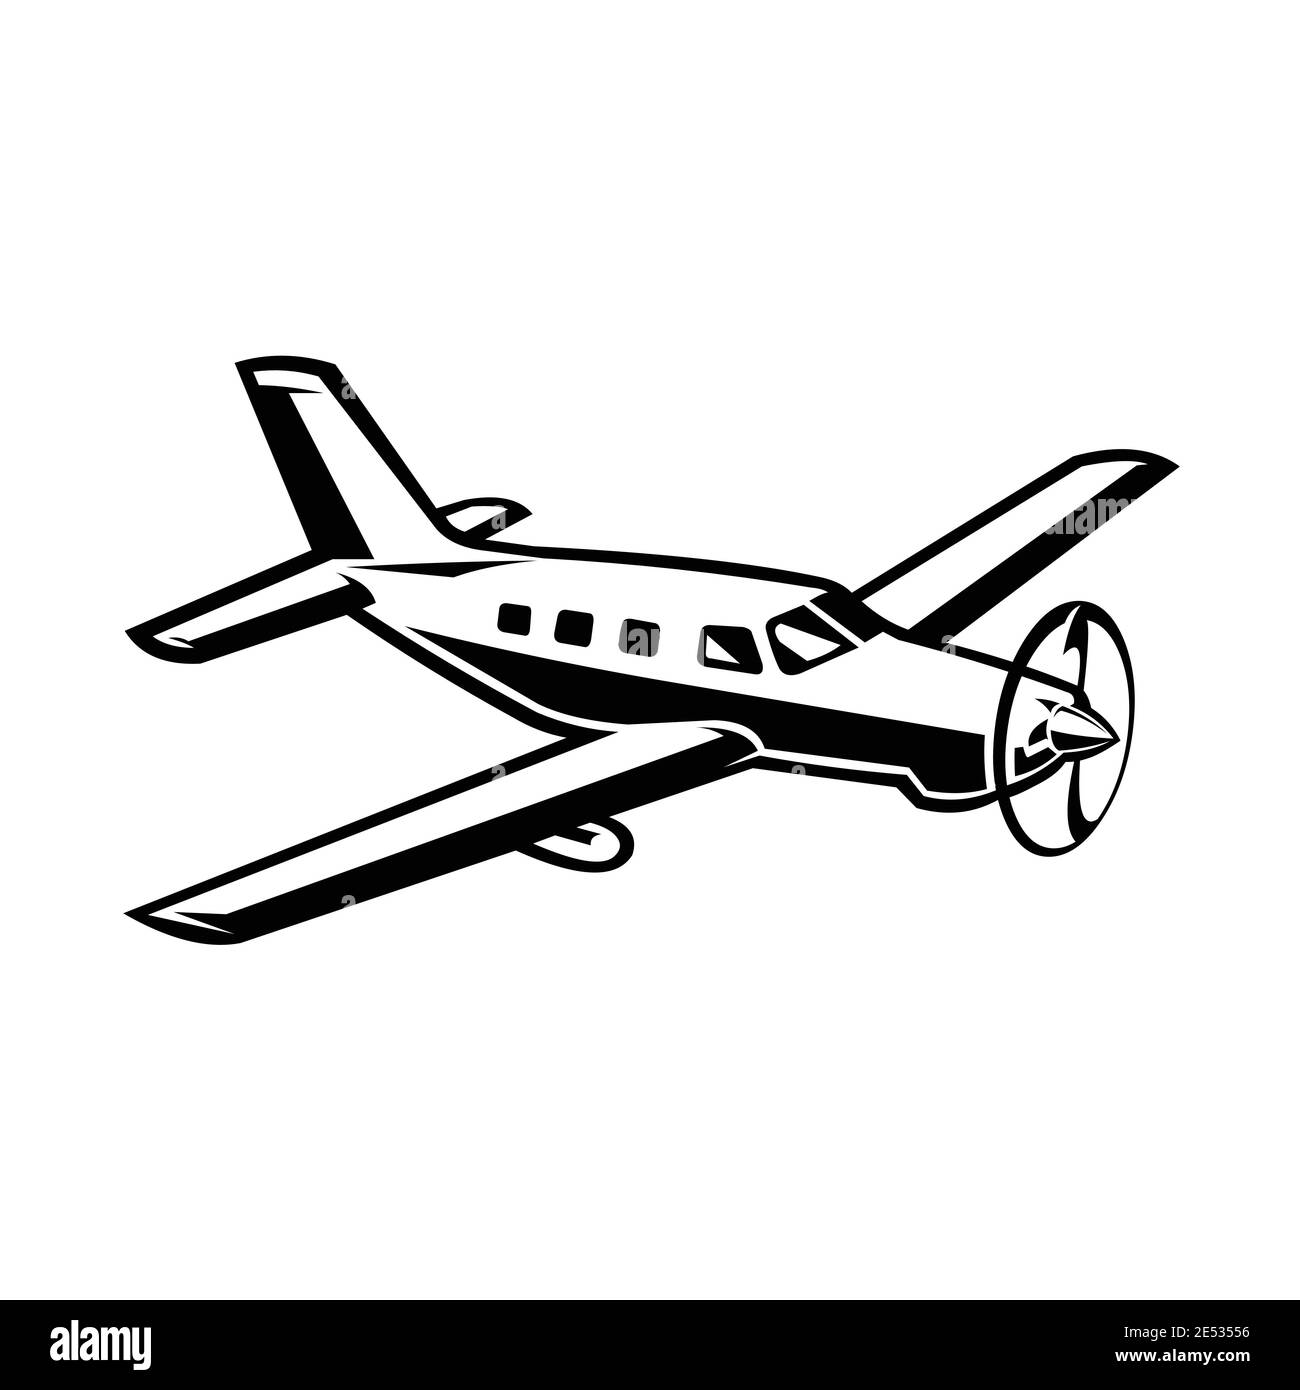 Baglæns Misforståelse Vellykket Small plane Cut Out Stock Images & Pictures - Alamy